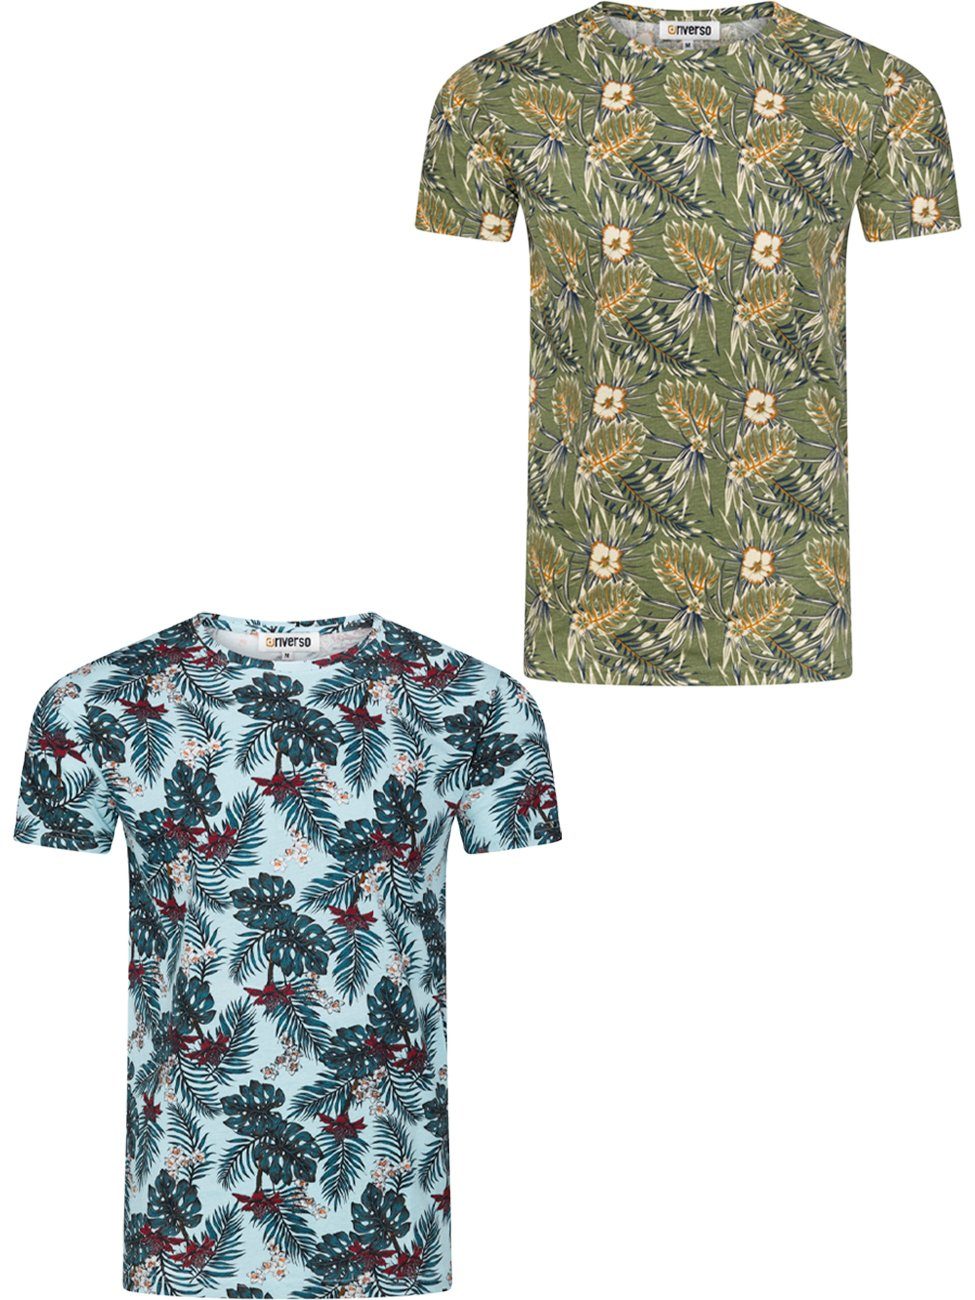 Baumwolle Rundhalsausschnitt Kurzarm Printshirt Farbmix mit 3 riverso aus Herren T-Shirt Hawaiishirt (2-tlg) Fit Regular RIVBill 100%